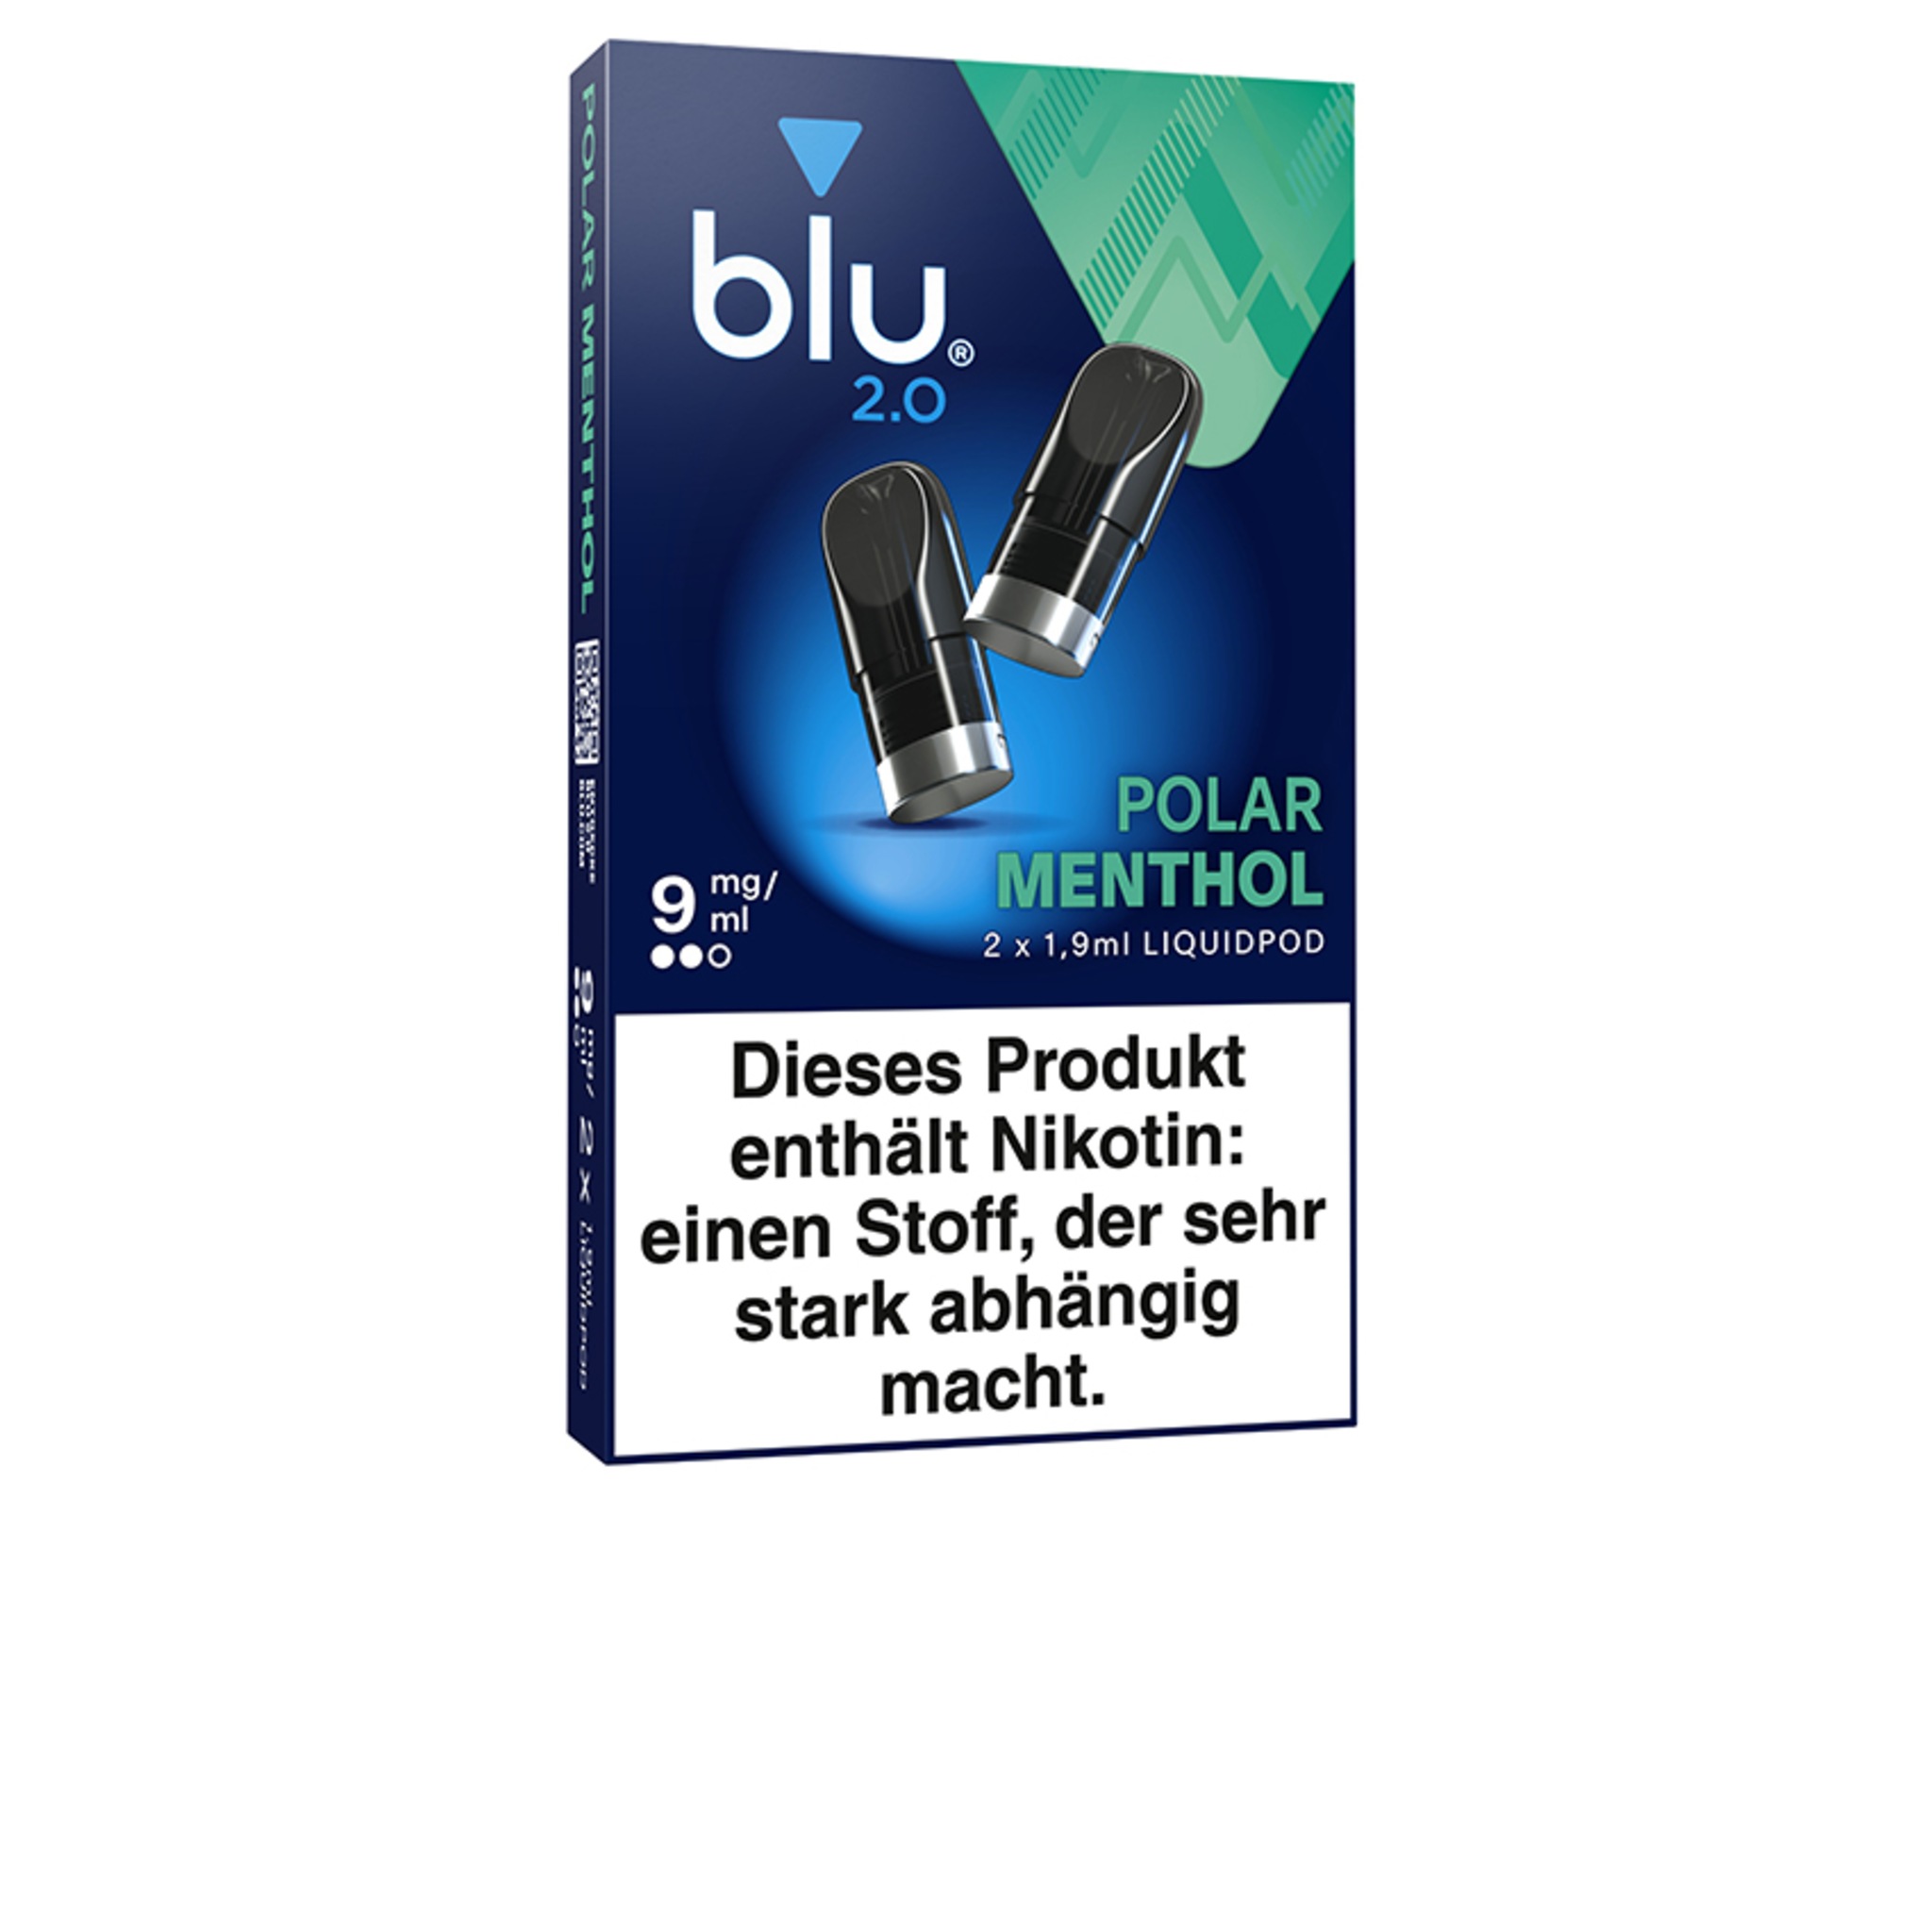 Blu 2.0 - Polar Menthol